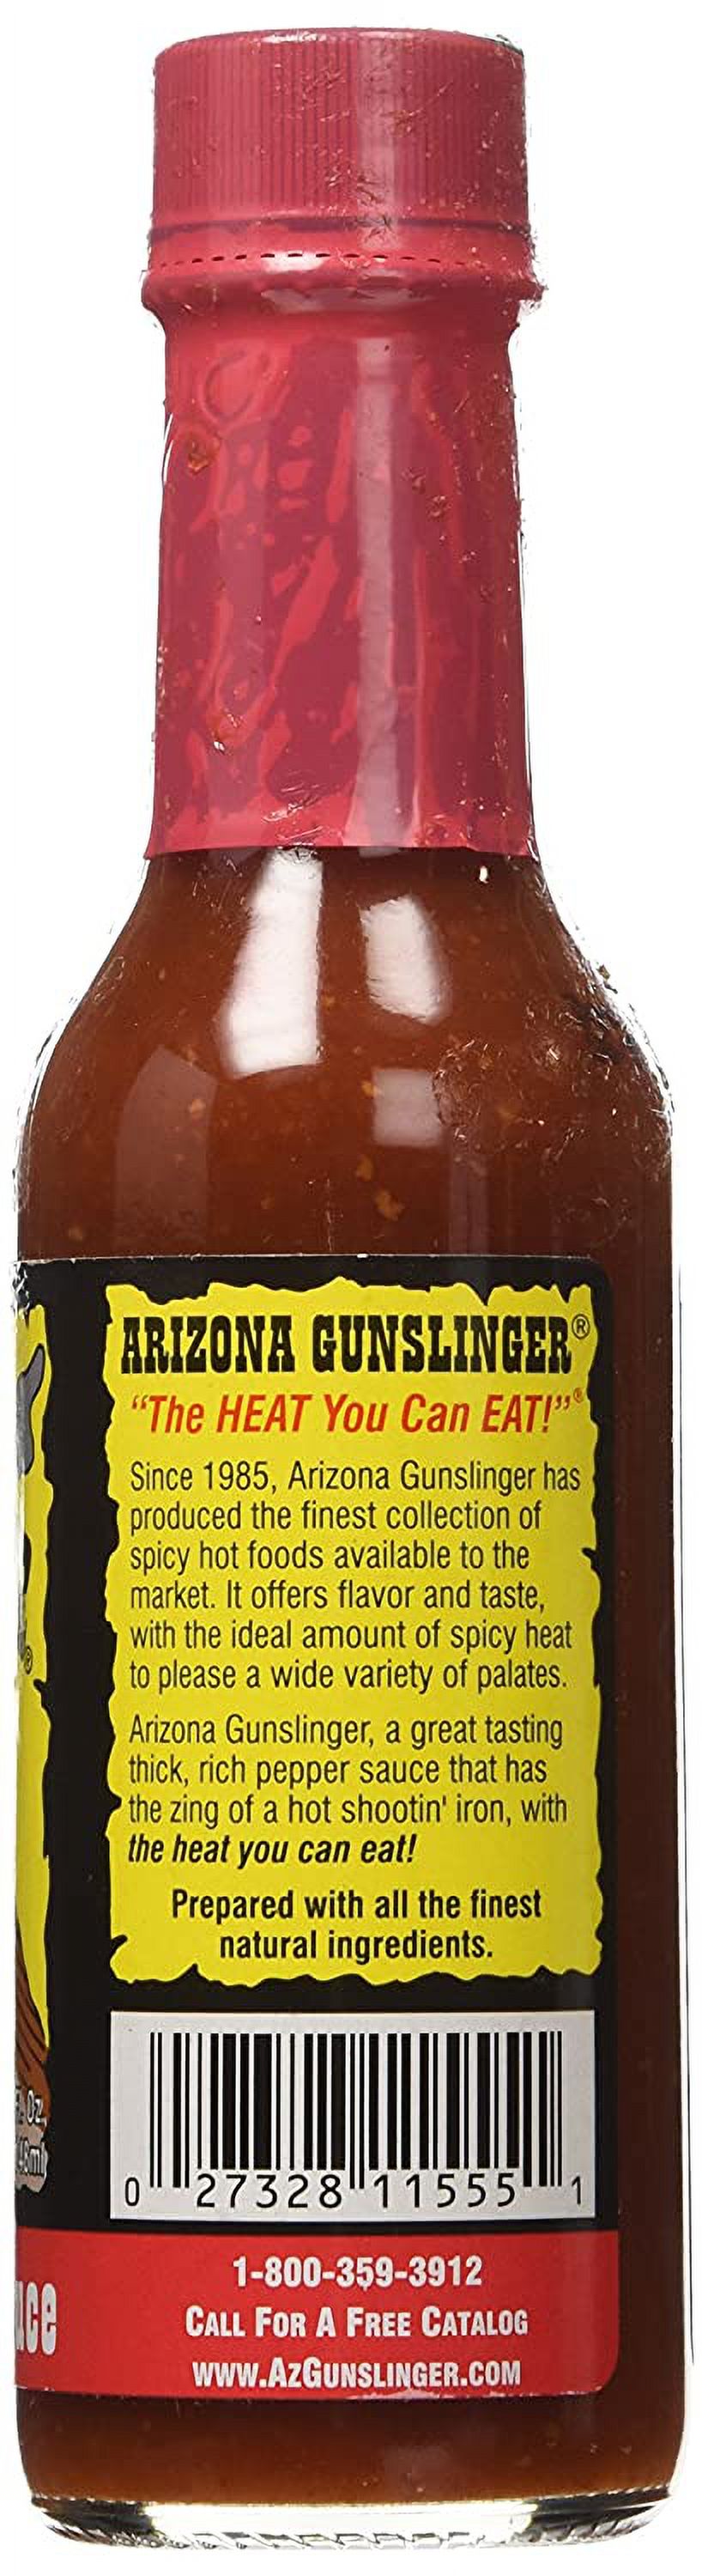 Az Gunslinger Jalapeno Red Sauce - image 3 of 4